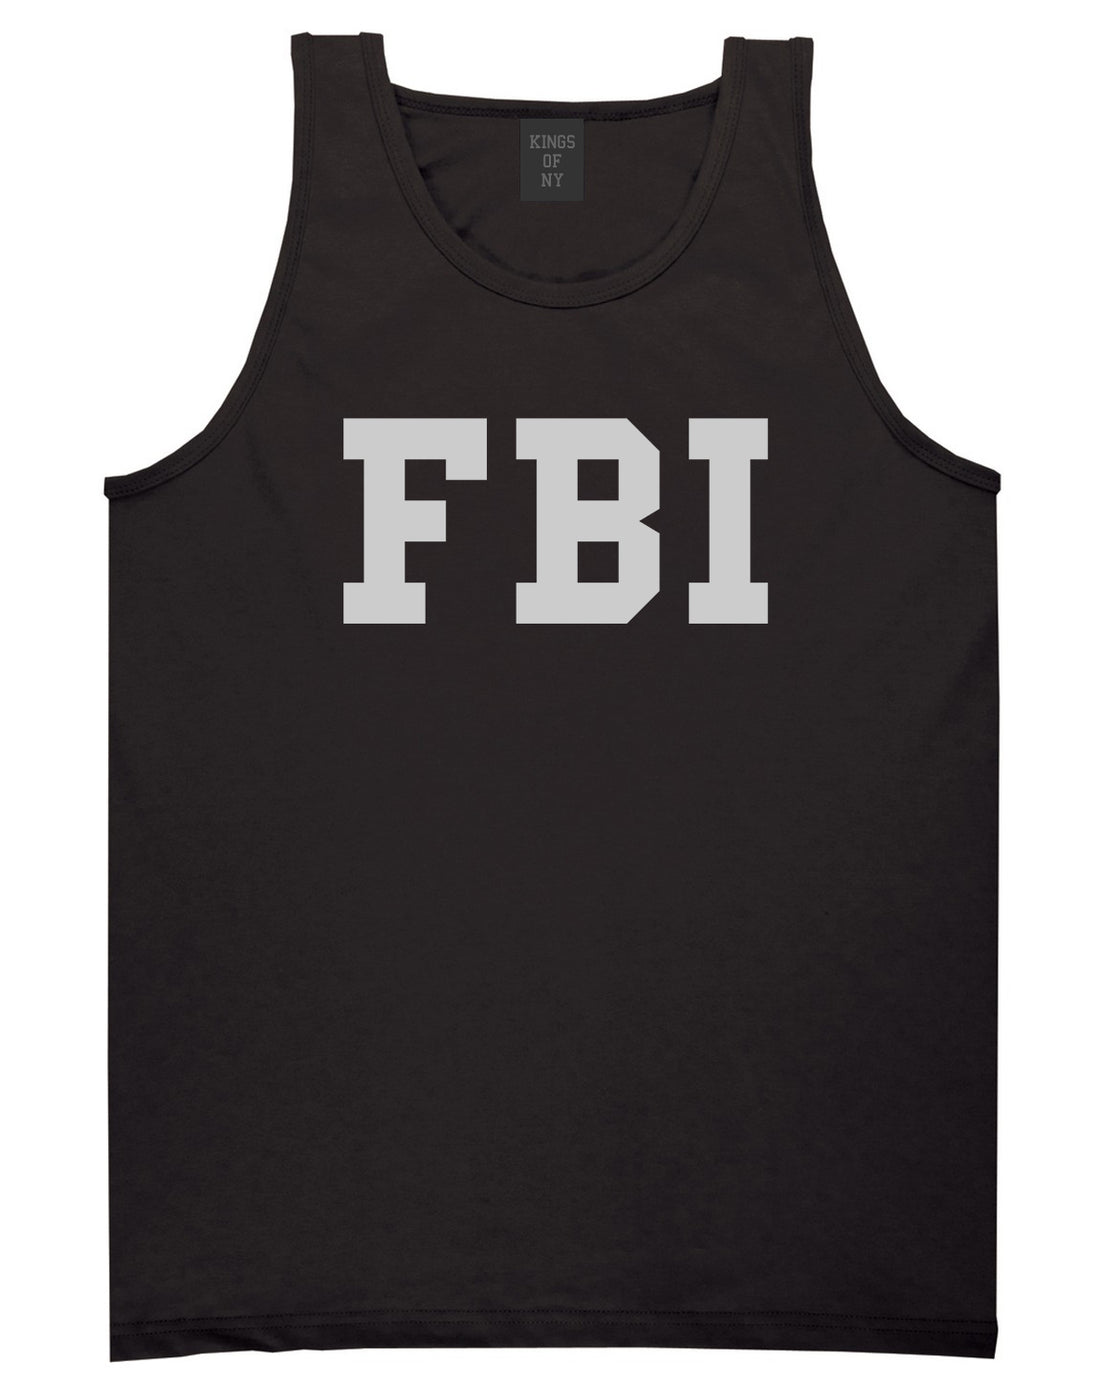 FBI Law Enforcement Mens Black Tank Top Shirt by KINGS OF NY